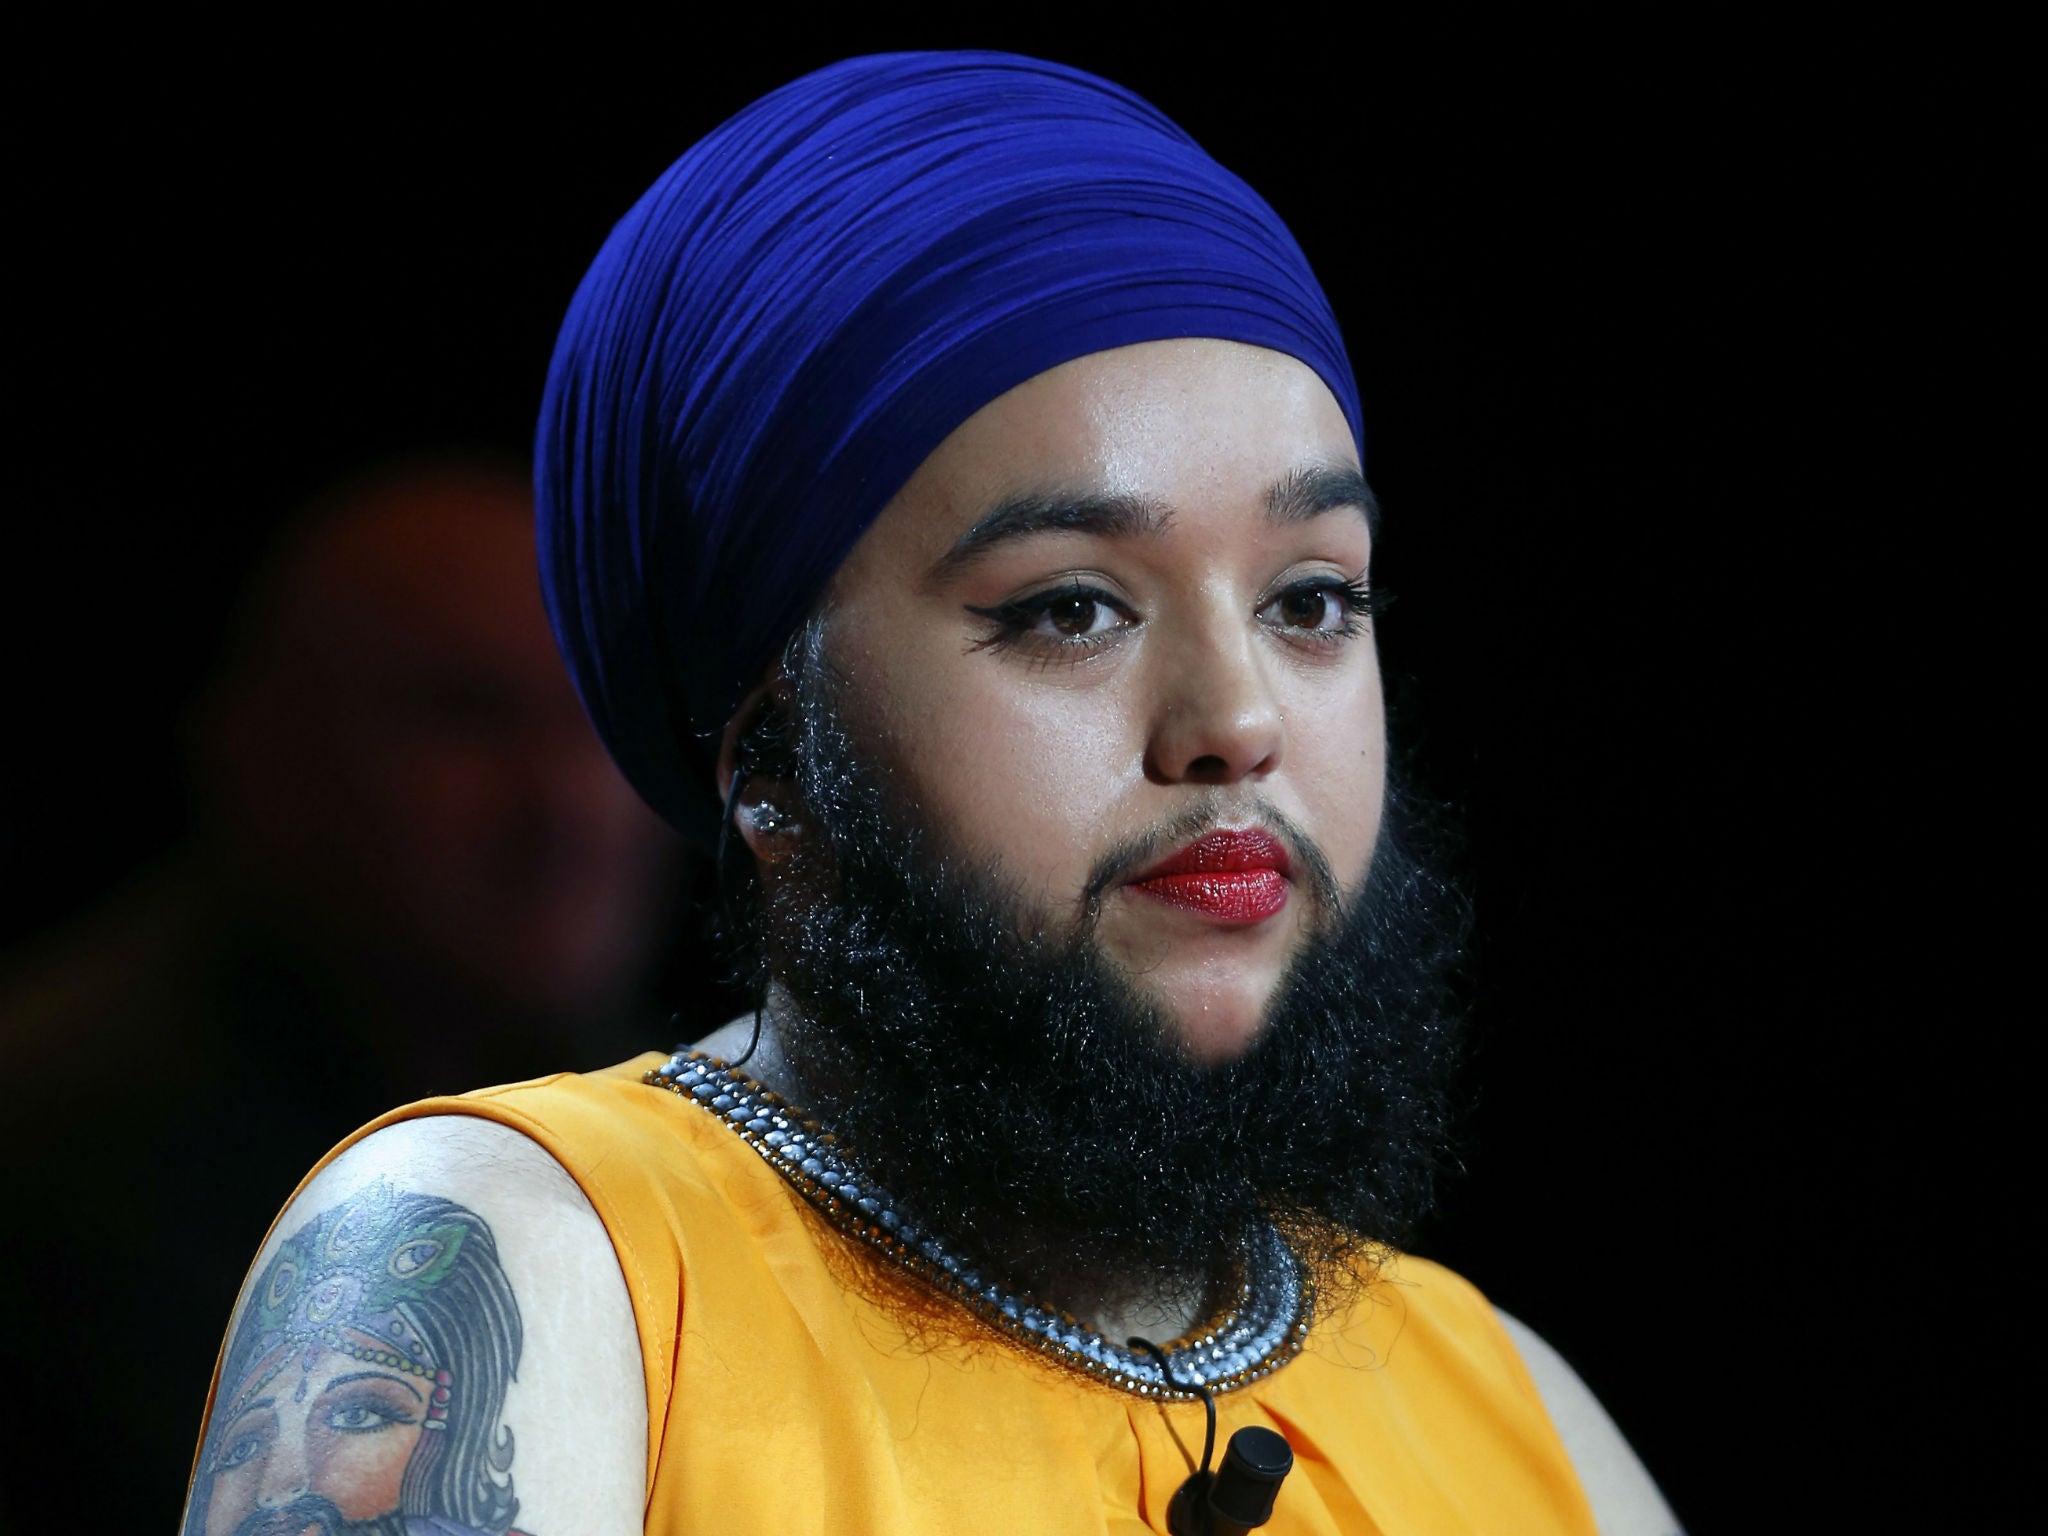 Harnaam Kaur Body Positive Activist With Full Beard Becomes